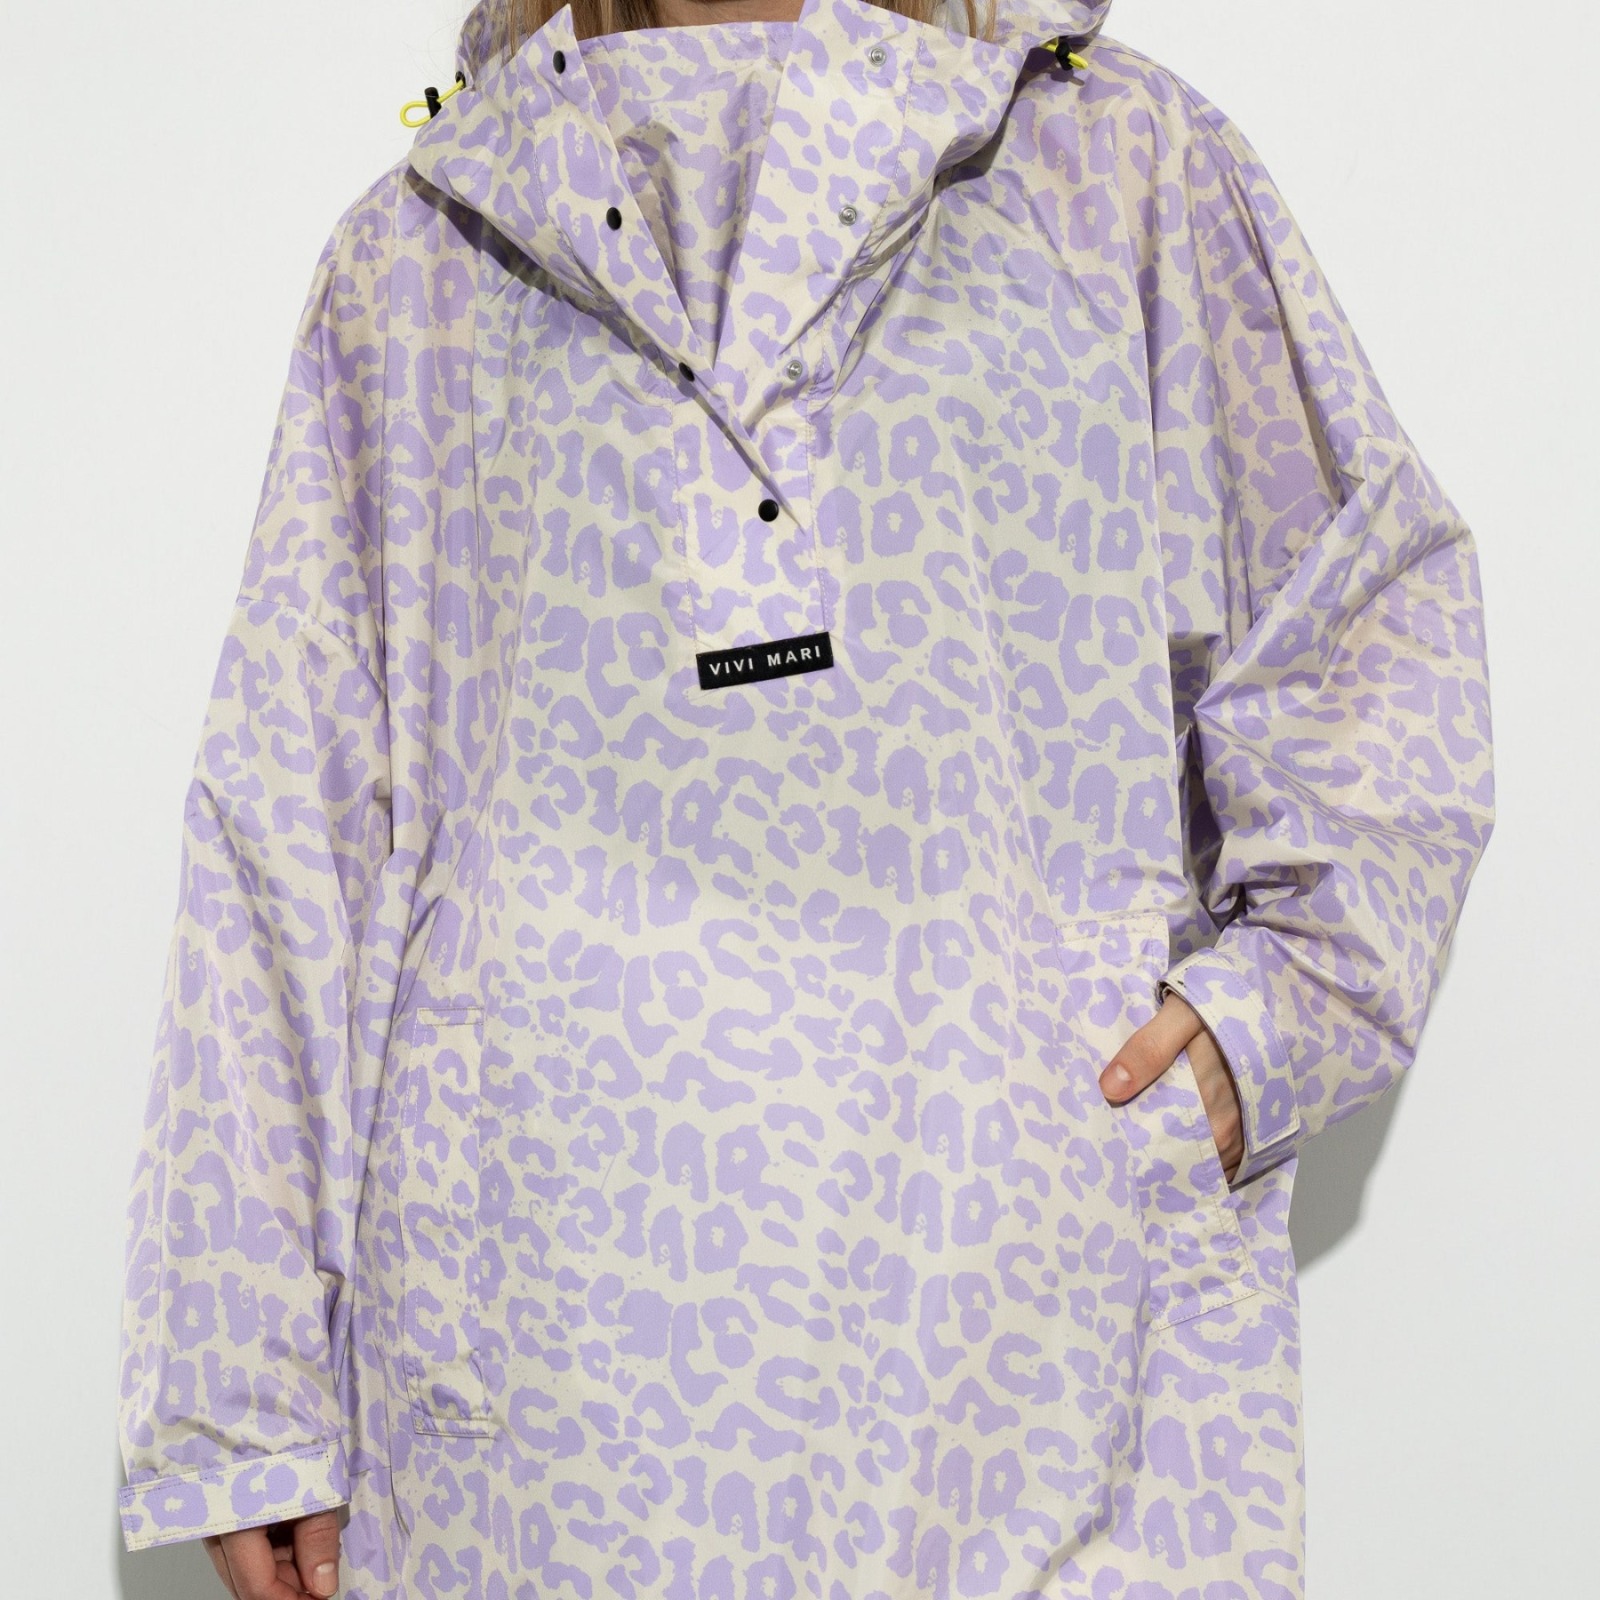 VIVI MARI - Raincoat leo splashes lavender/grey 5